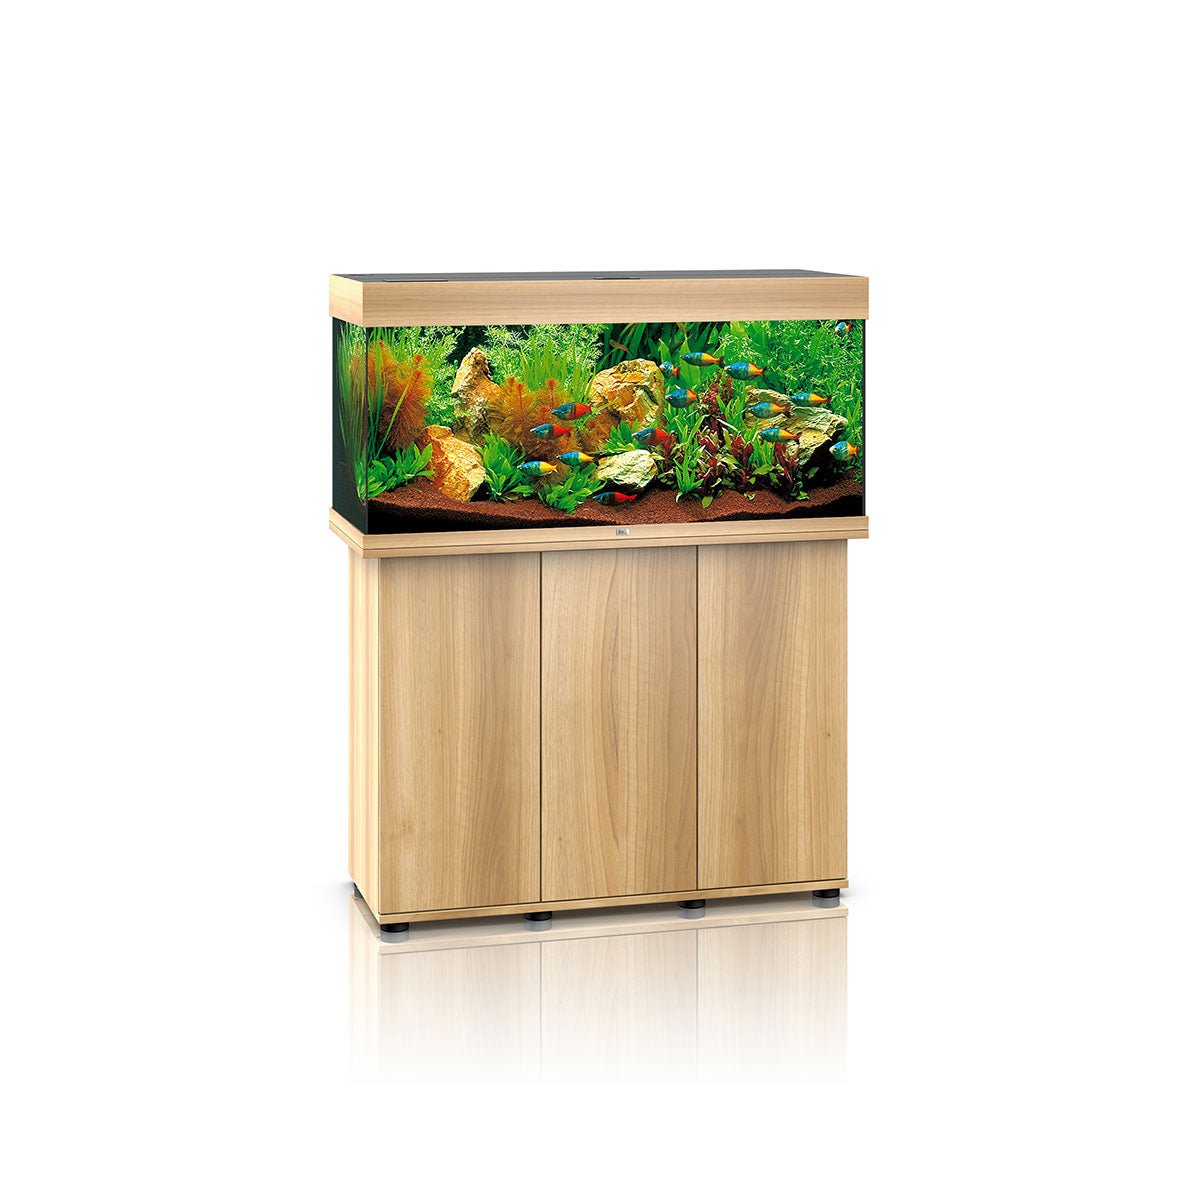 Juwel Rio 180 LED Aquarium and Cabinet (Light Wood) - Charterhouse Aquatics